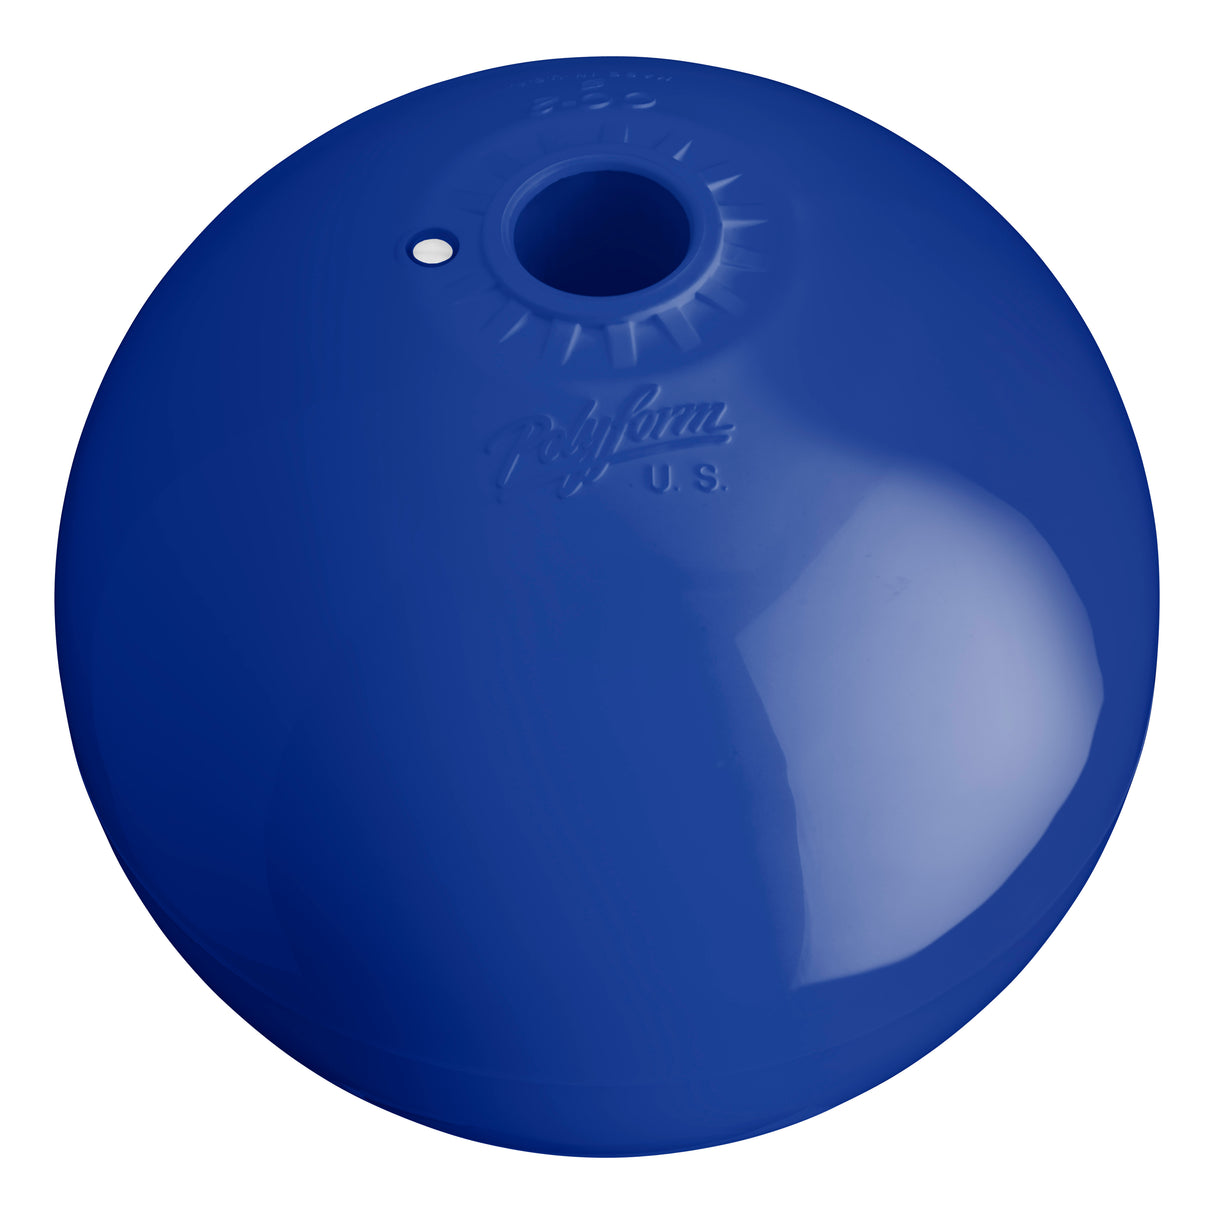 Hole through center mooring and marker buoy, Polyform CC-1 Cobalt Blue angled shot